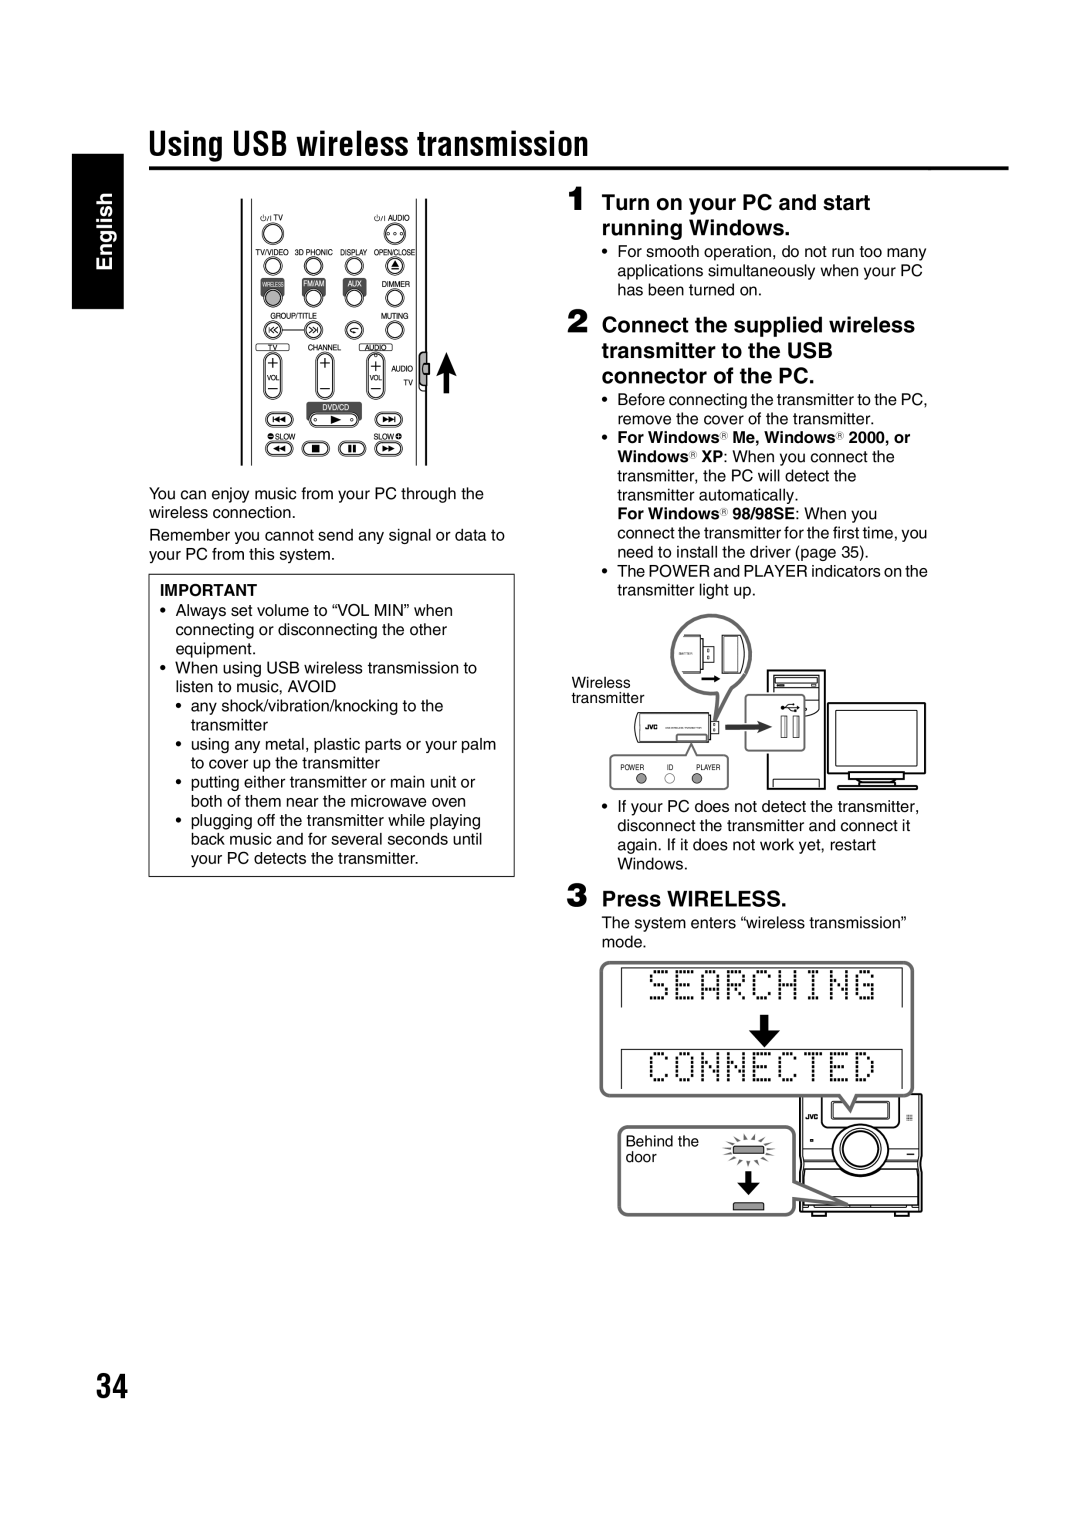 JVC GVT0144-005A manual Using USB wireless transmission, English, Turn on your PC and start running Windows, Press WIRELESS 